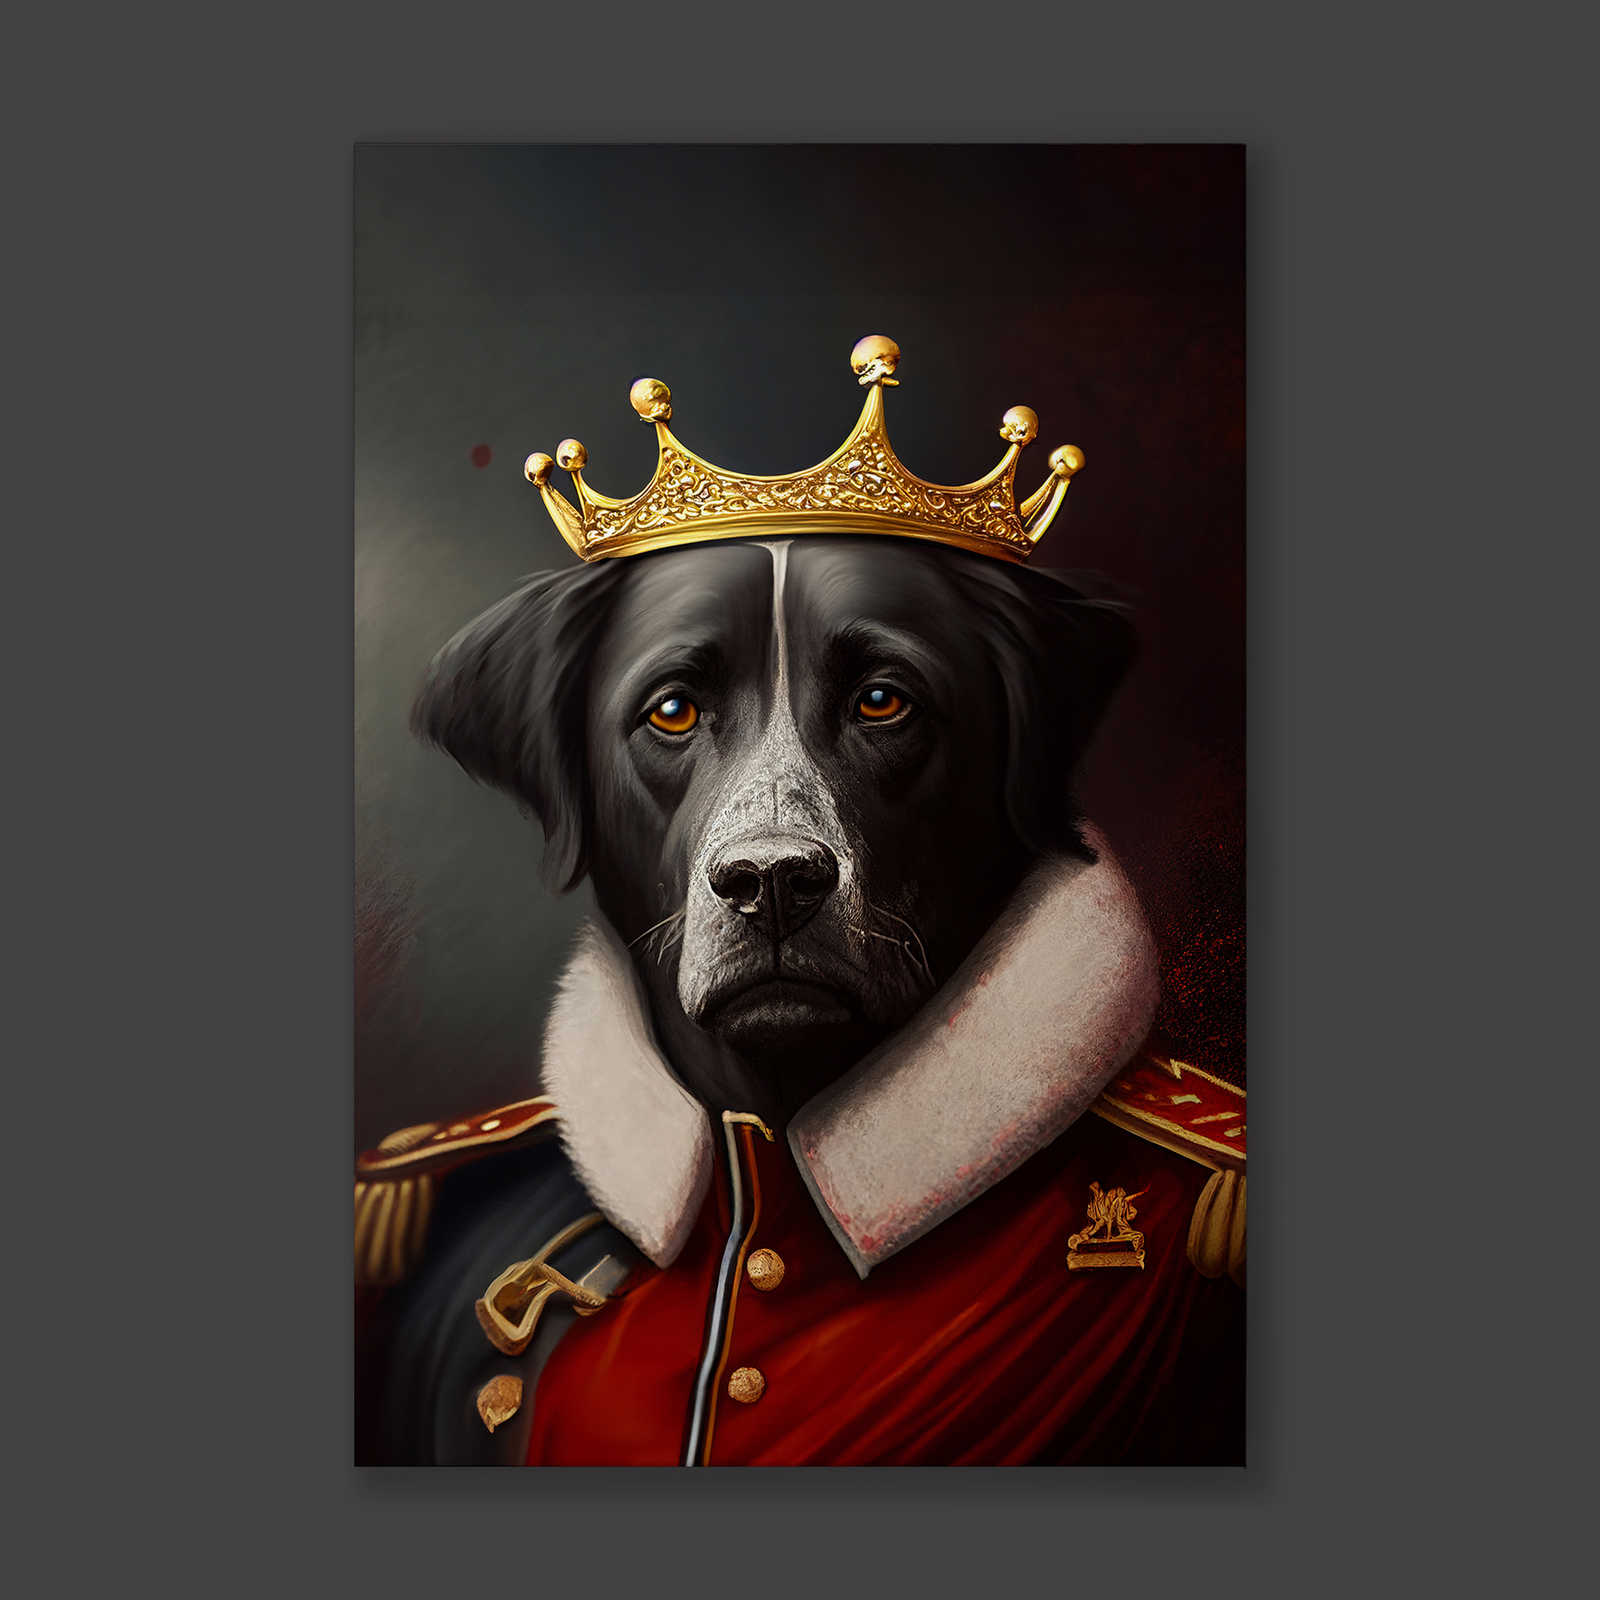         KI Canvas schilderij »Royal Dog« - 60 cm x 90 cm
    